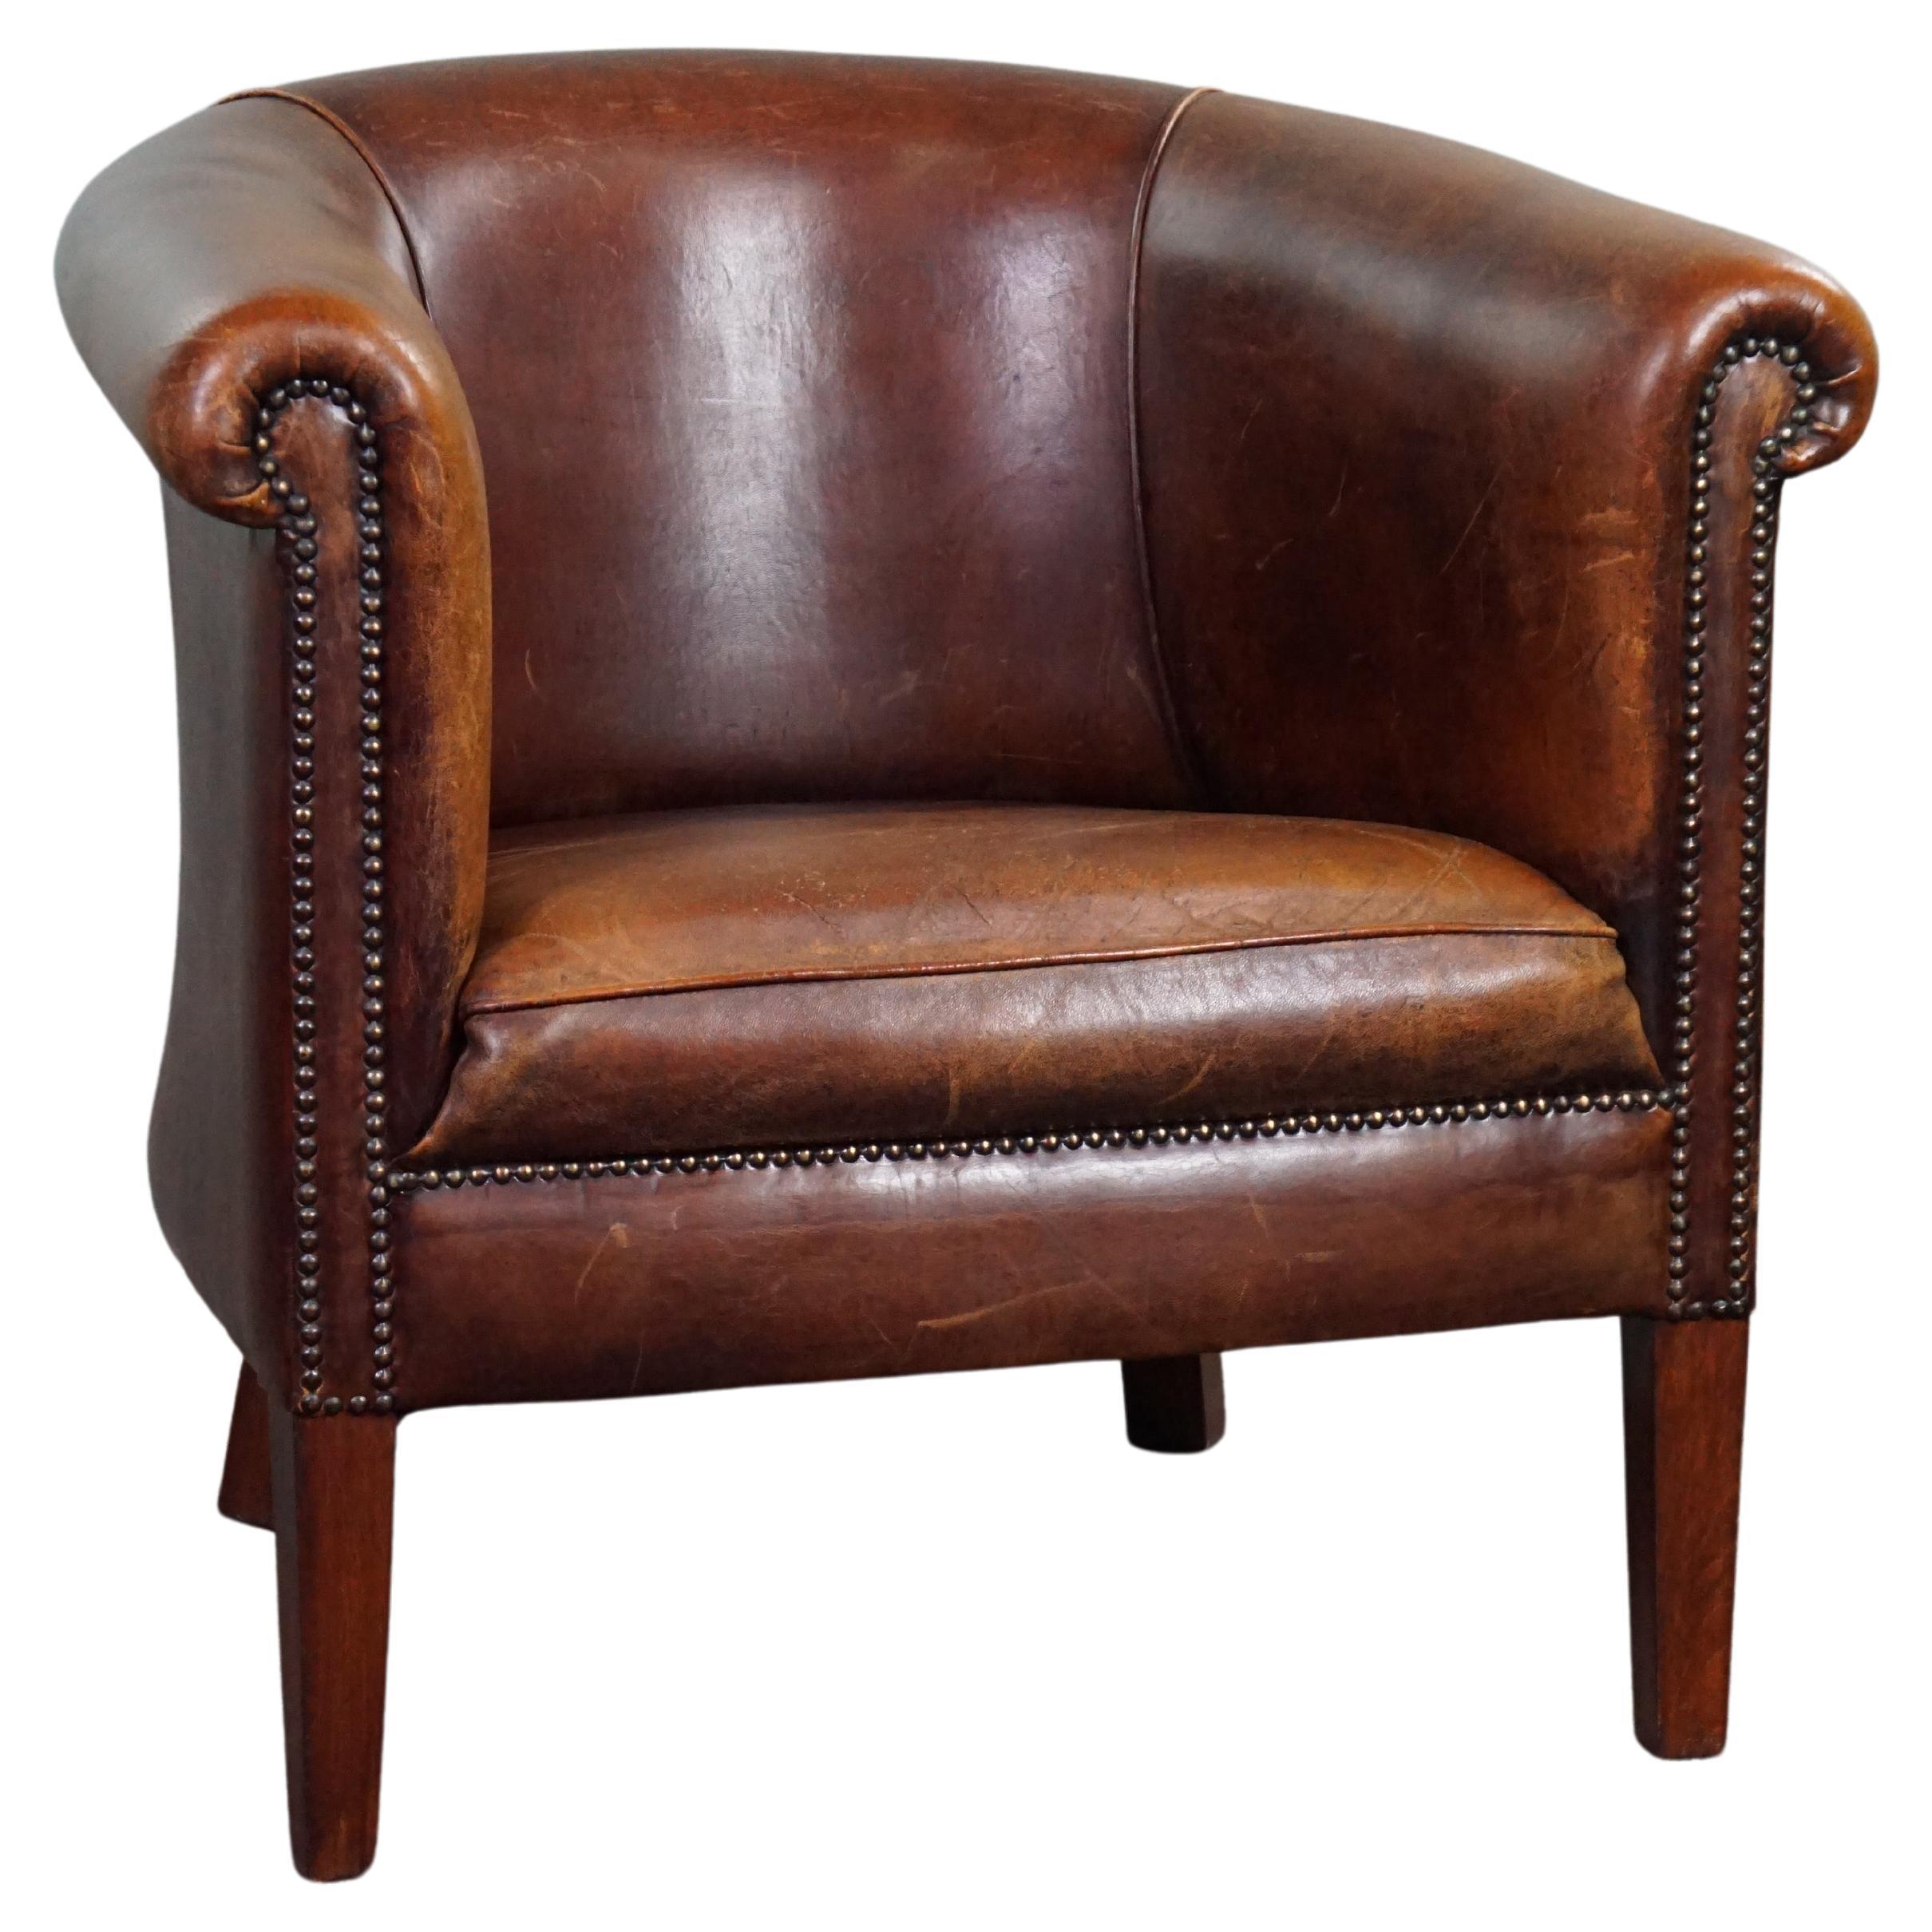 Attractive sheepskin leather club chair